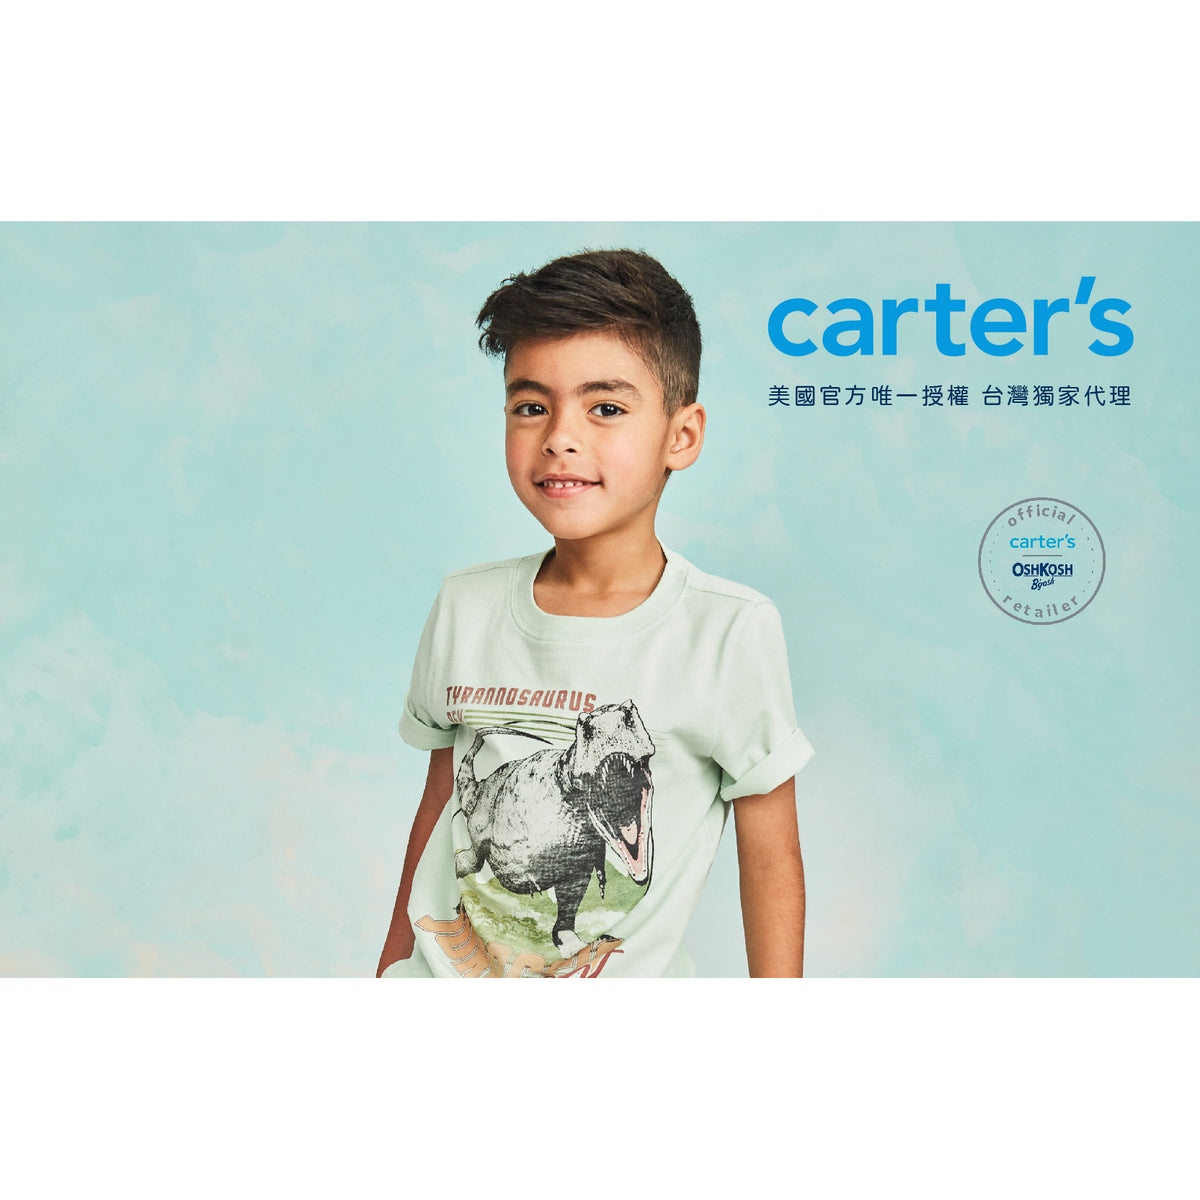 Carter's 夏日賽道上衣(6-8)